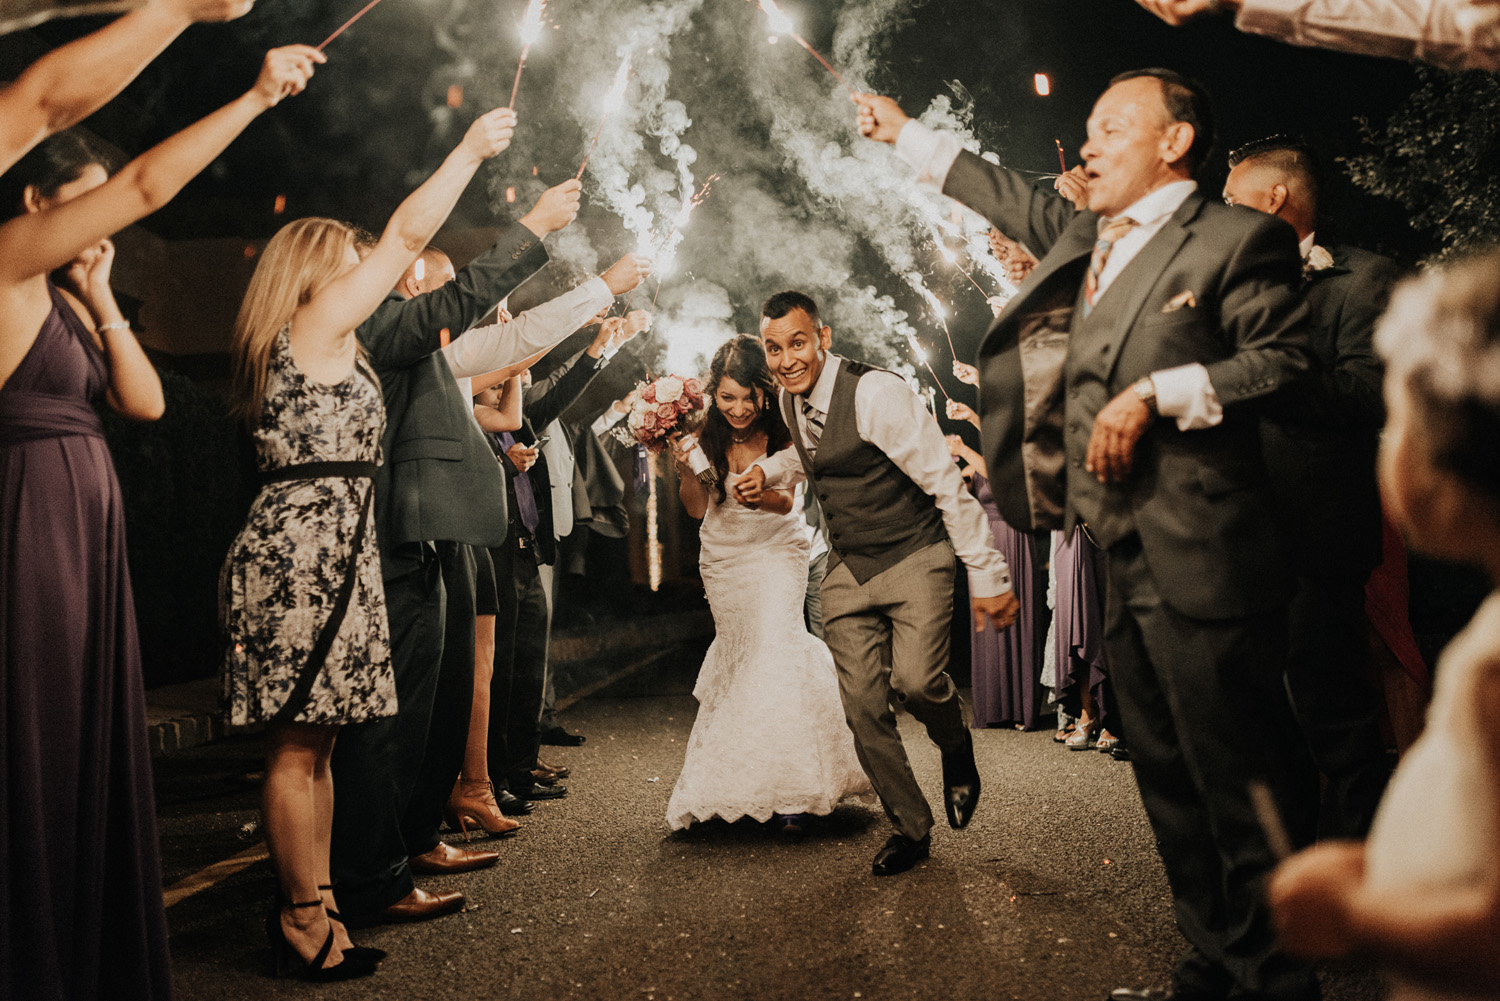 KyleWillisPhoto-Kyle-Willis-Photography-The-Radisson-Hotel-Freehold-New-Jersey-Wedding-Emerald-Ballroom-Spanish-Latino-Philadelphia-South-Engagement